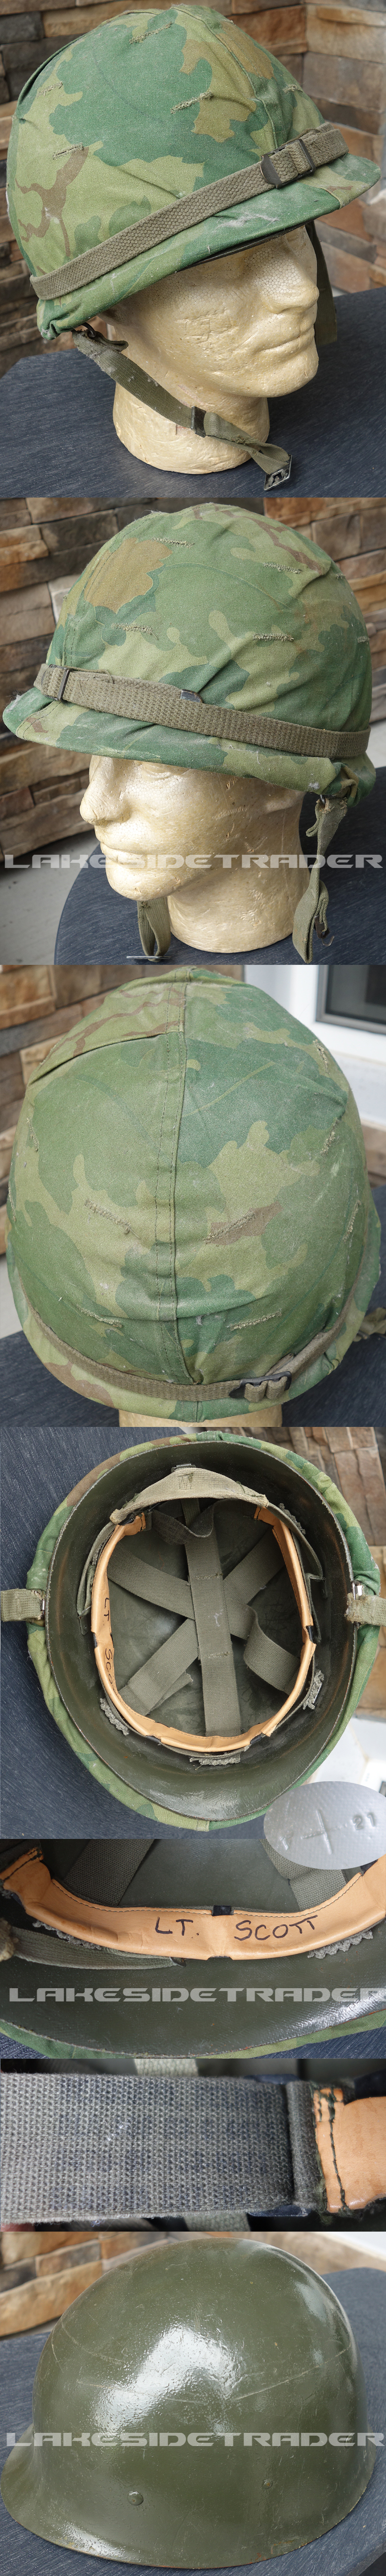 Vienam era US M1 Helmet with Camo Cover